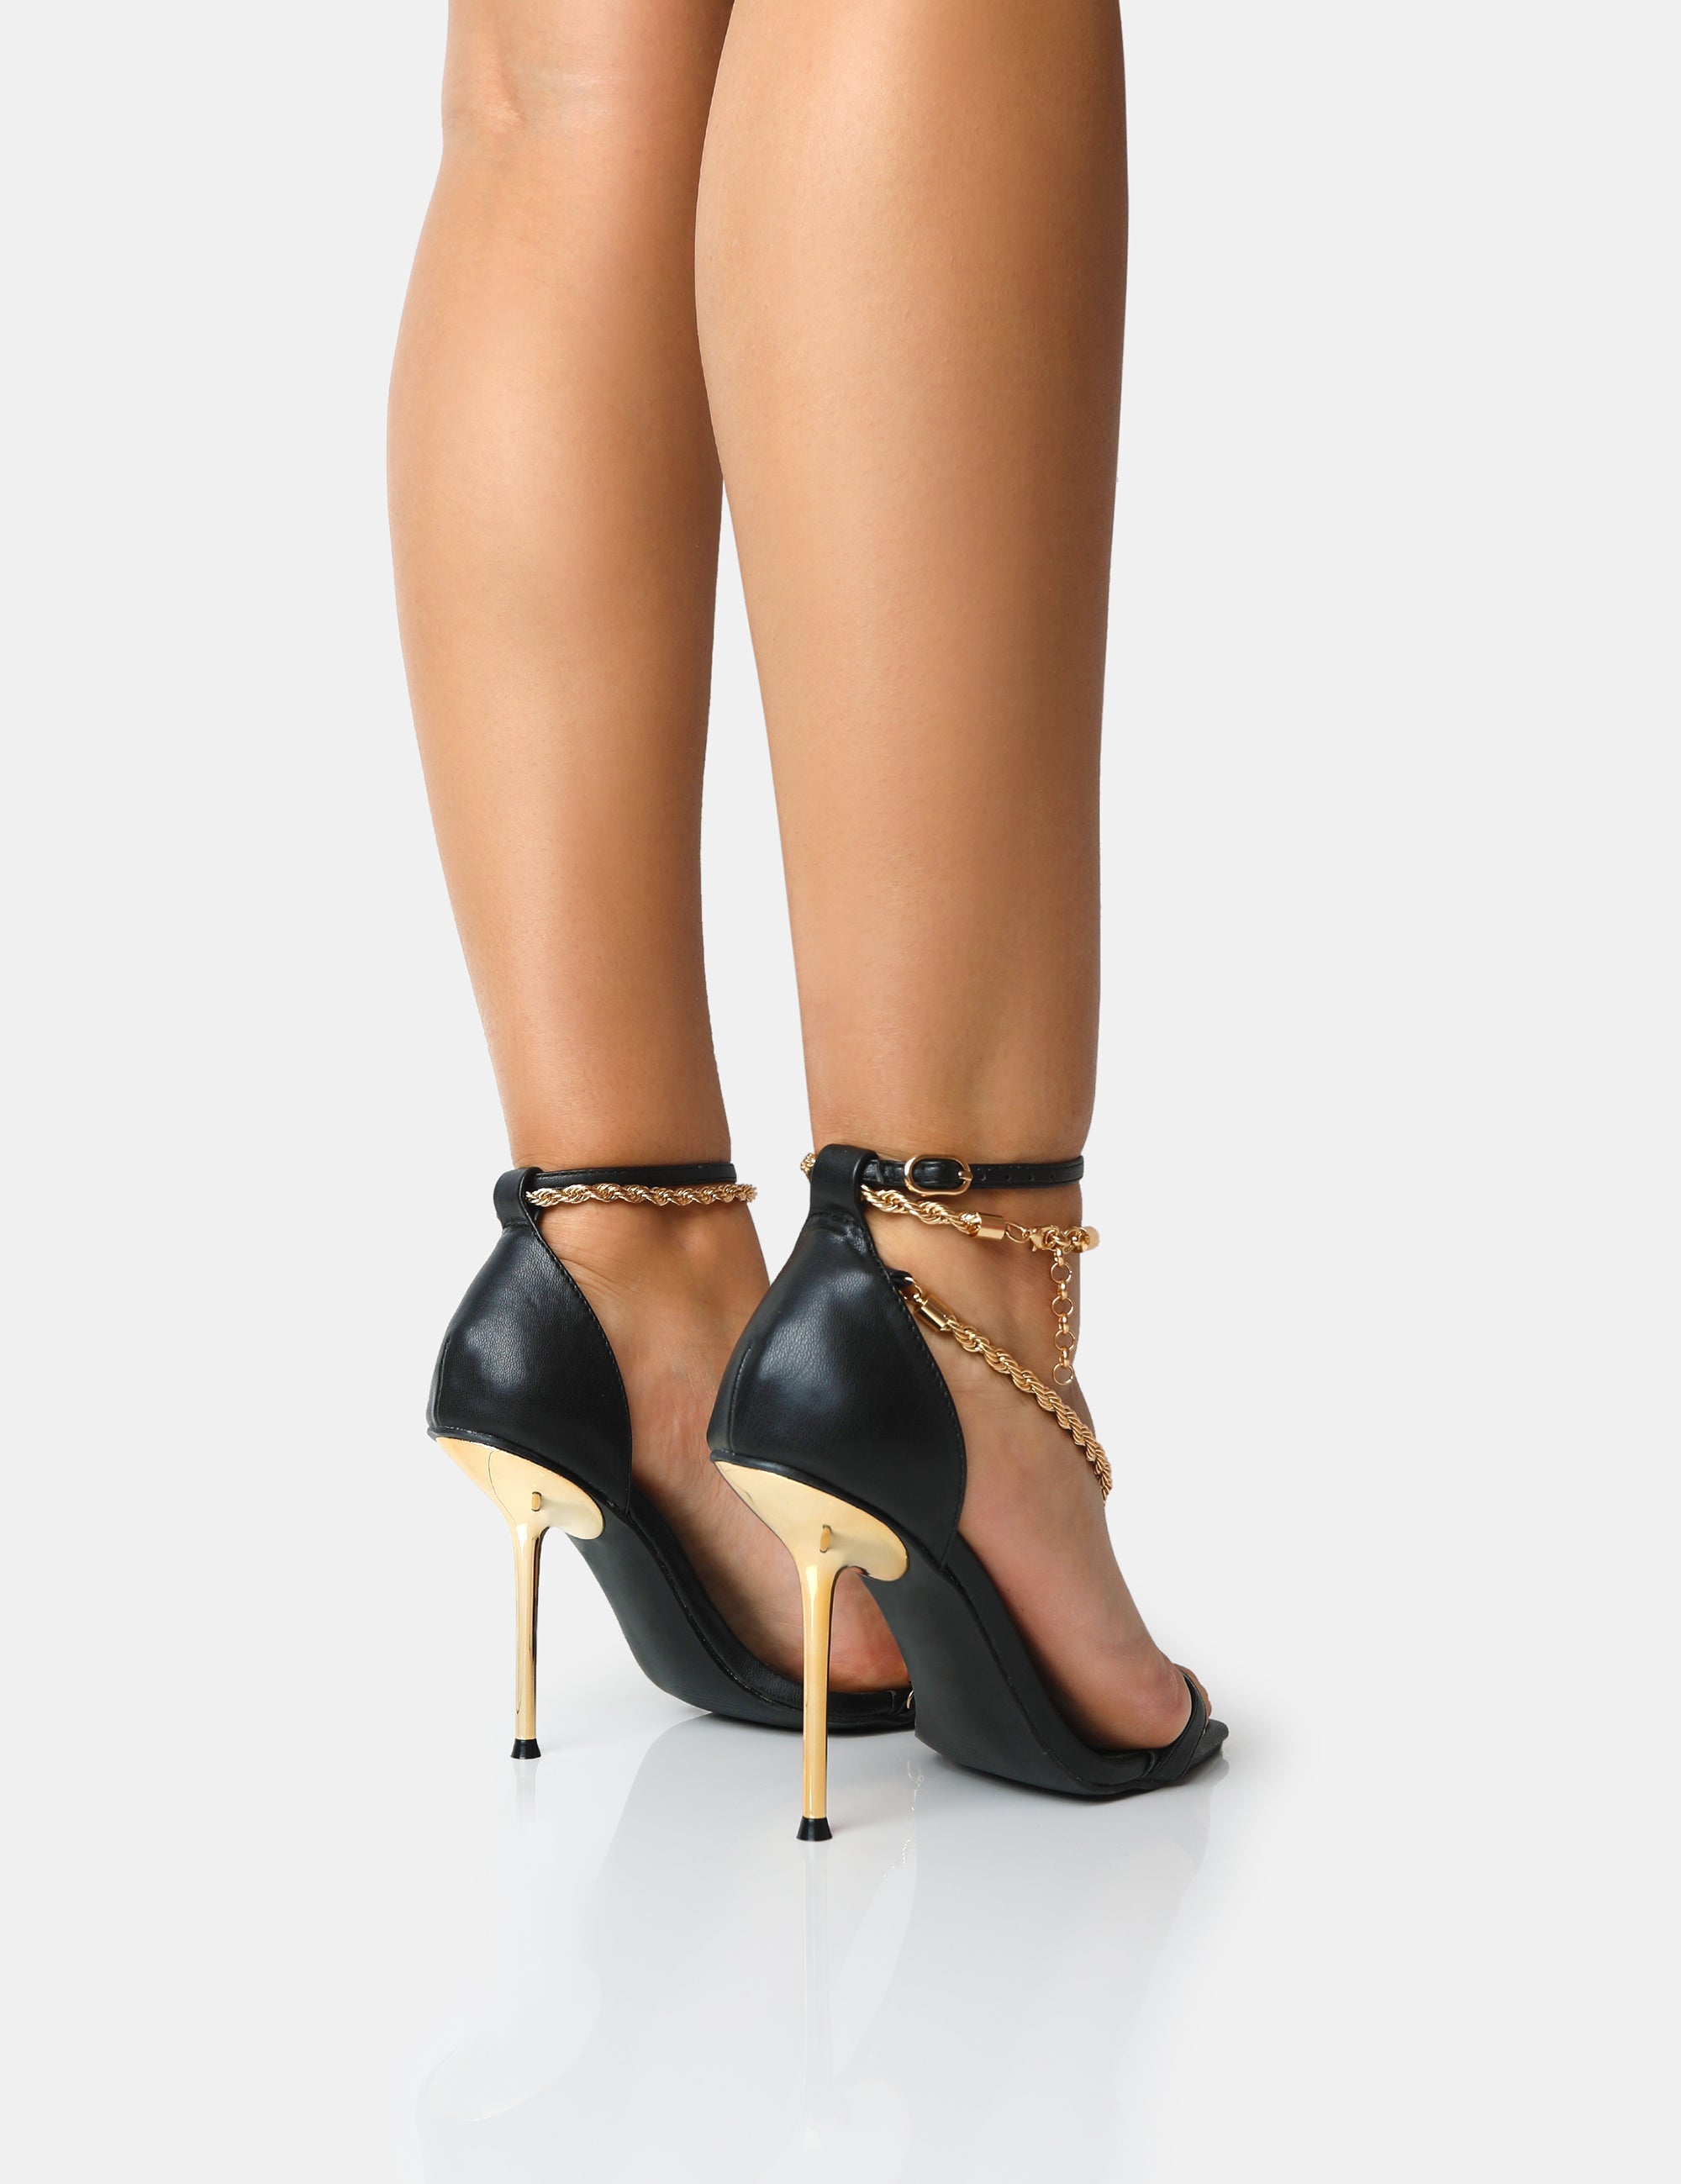 Colour cherie Womens Black Gold Stud High Heels Size 7 - beyond exchange